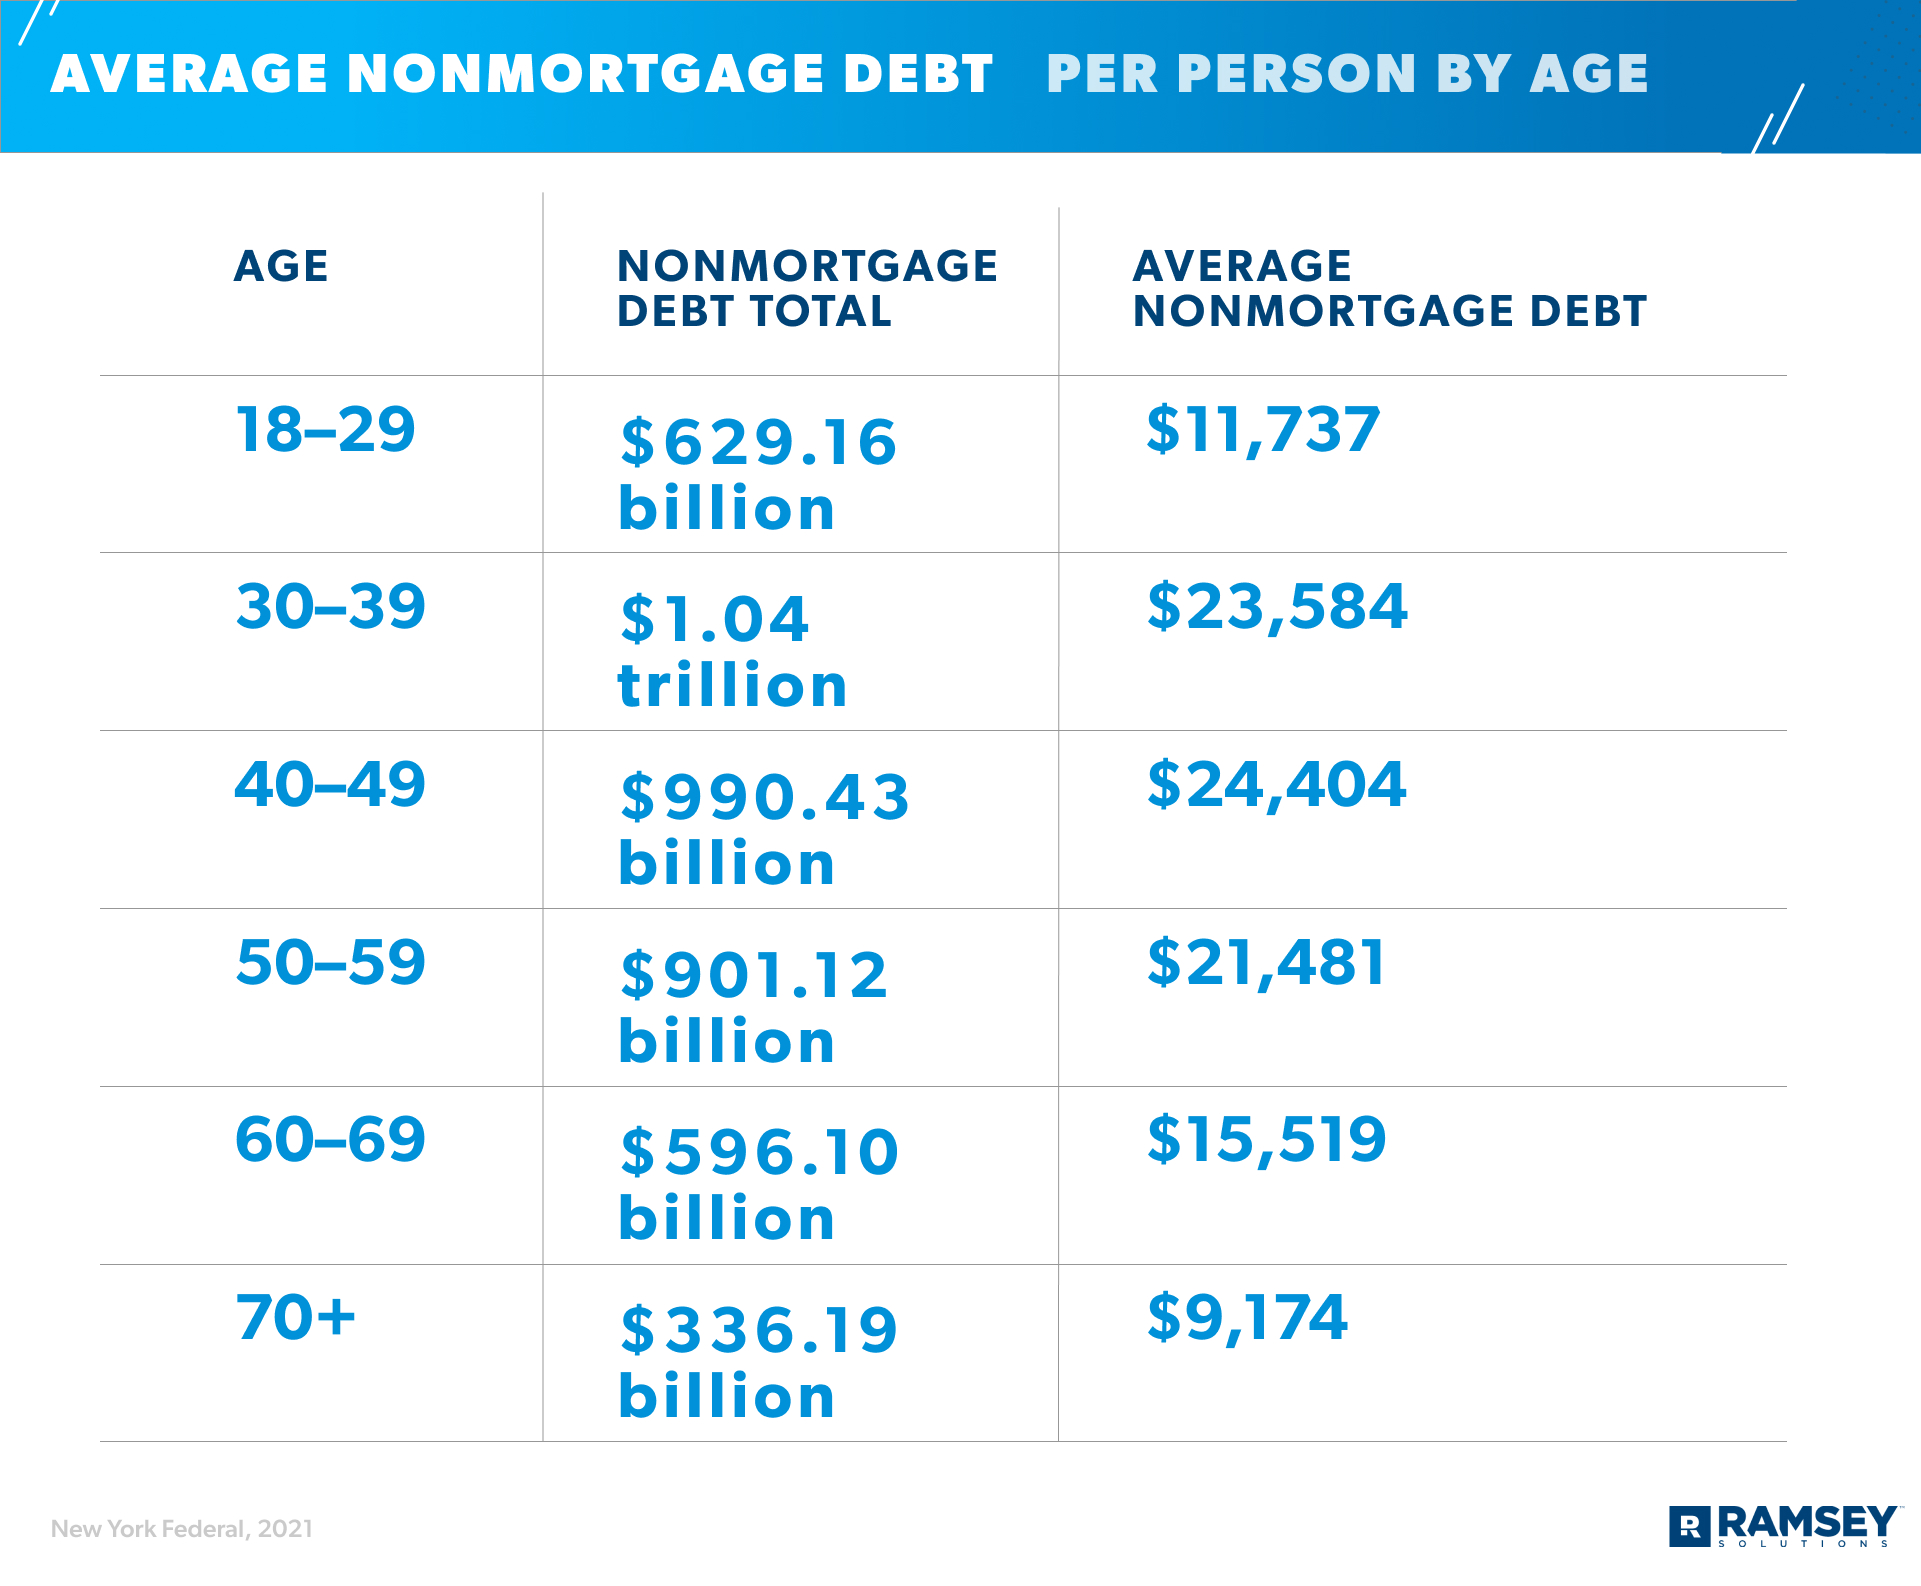 Average Nonmortgage Debt